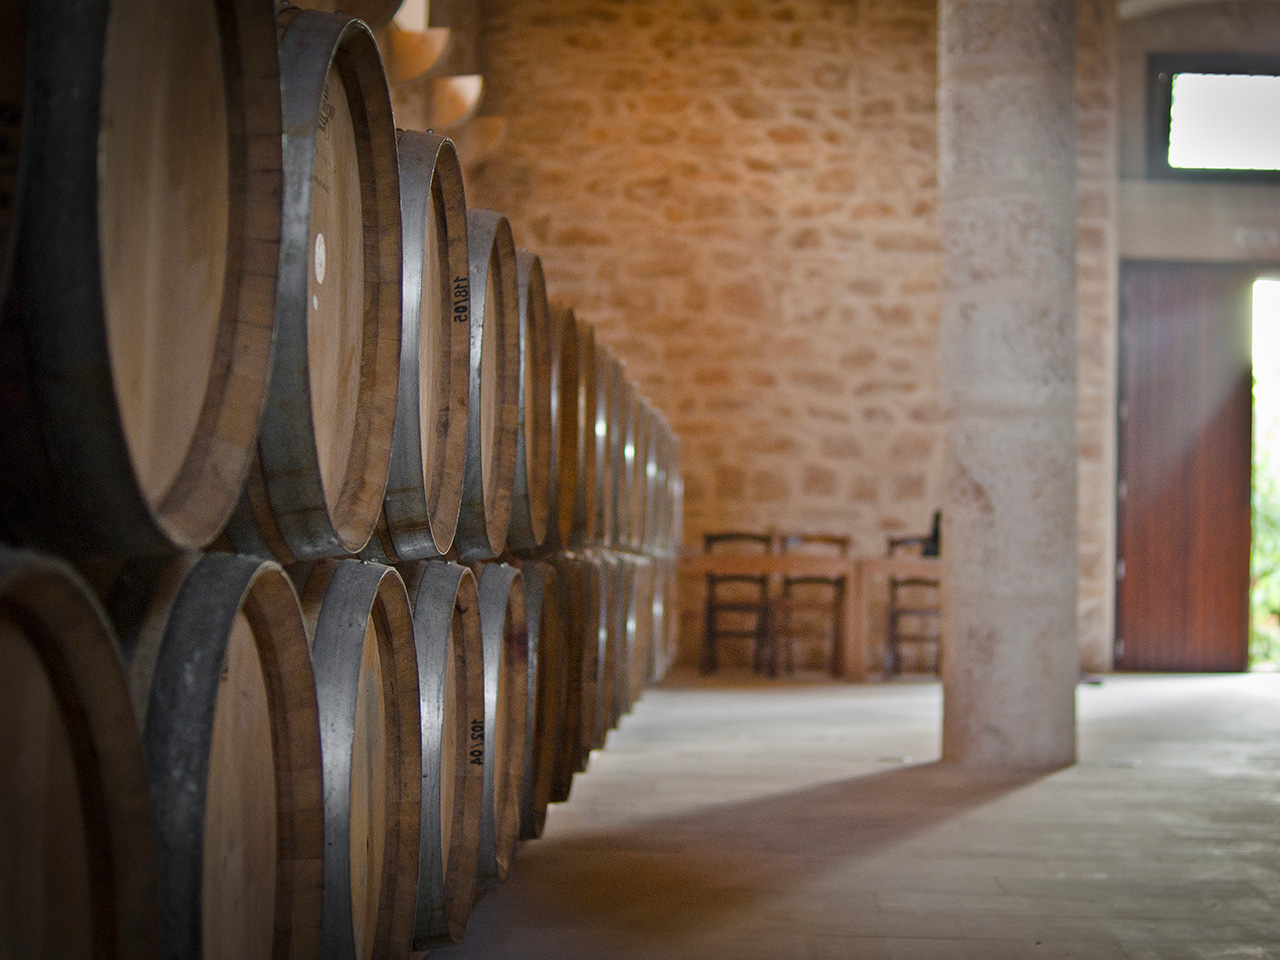 barrels in a cellar